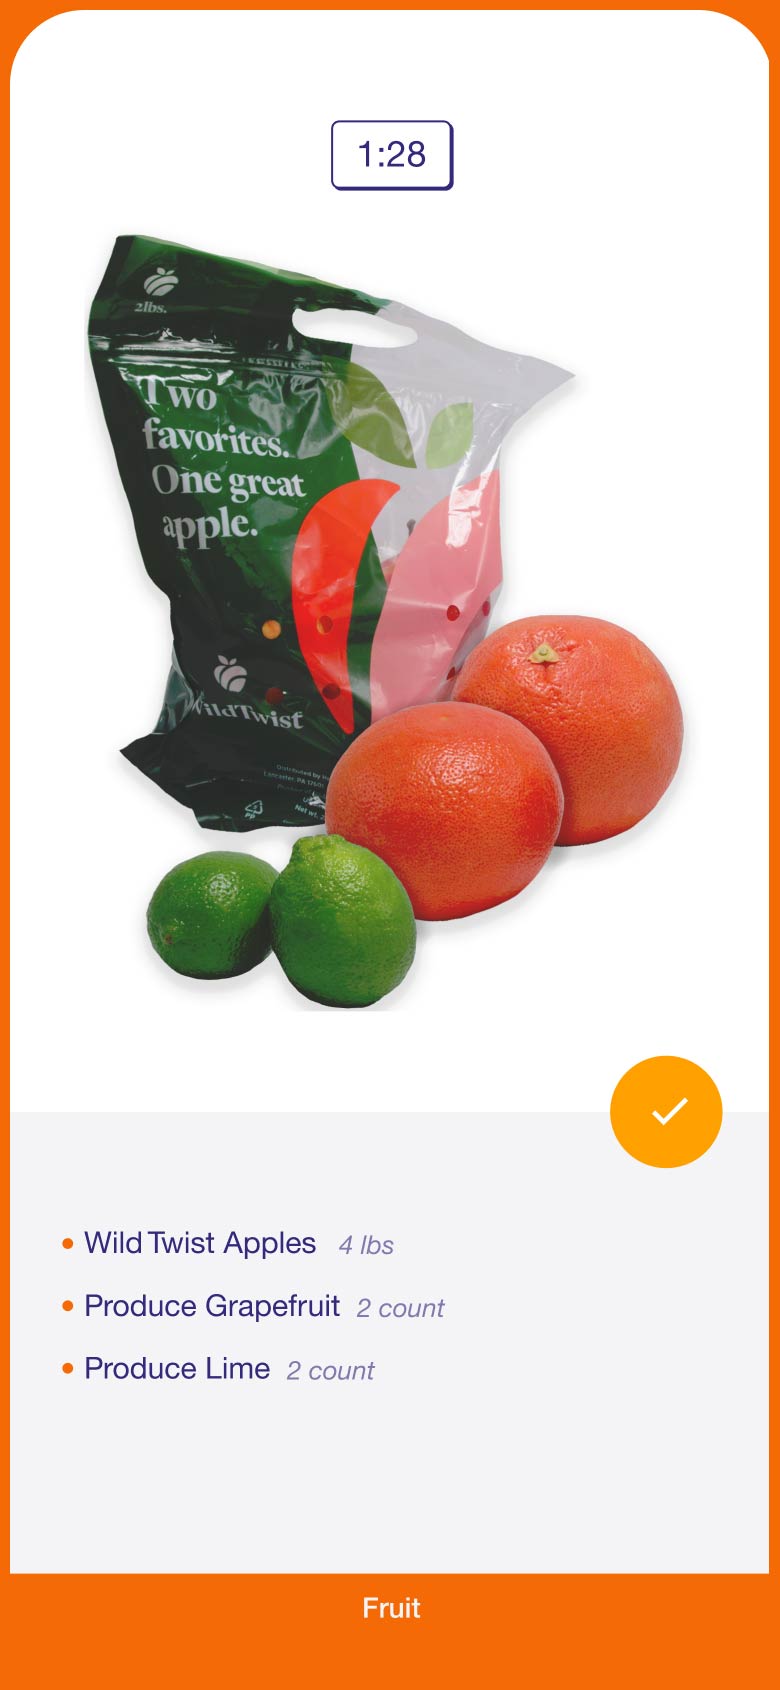 Fruit bundle number 2: 4 poinds bag of Wild Twist apples, 2 grapefruit, and 2 limes.